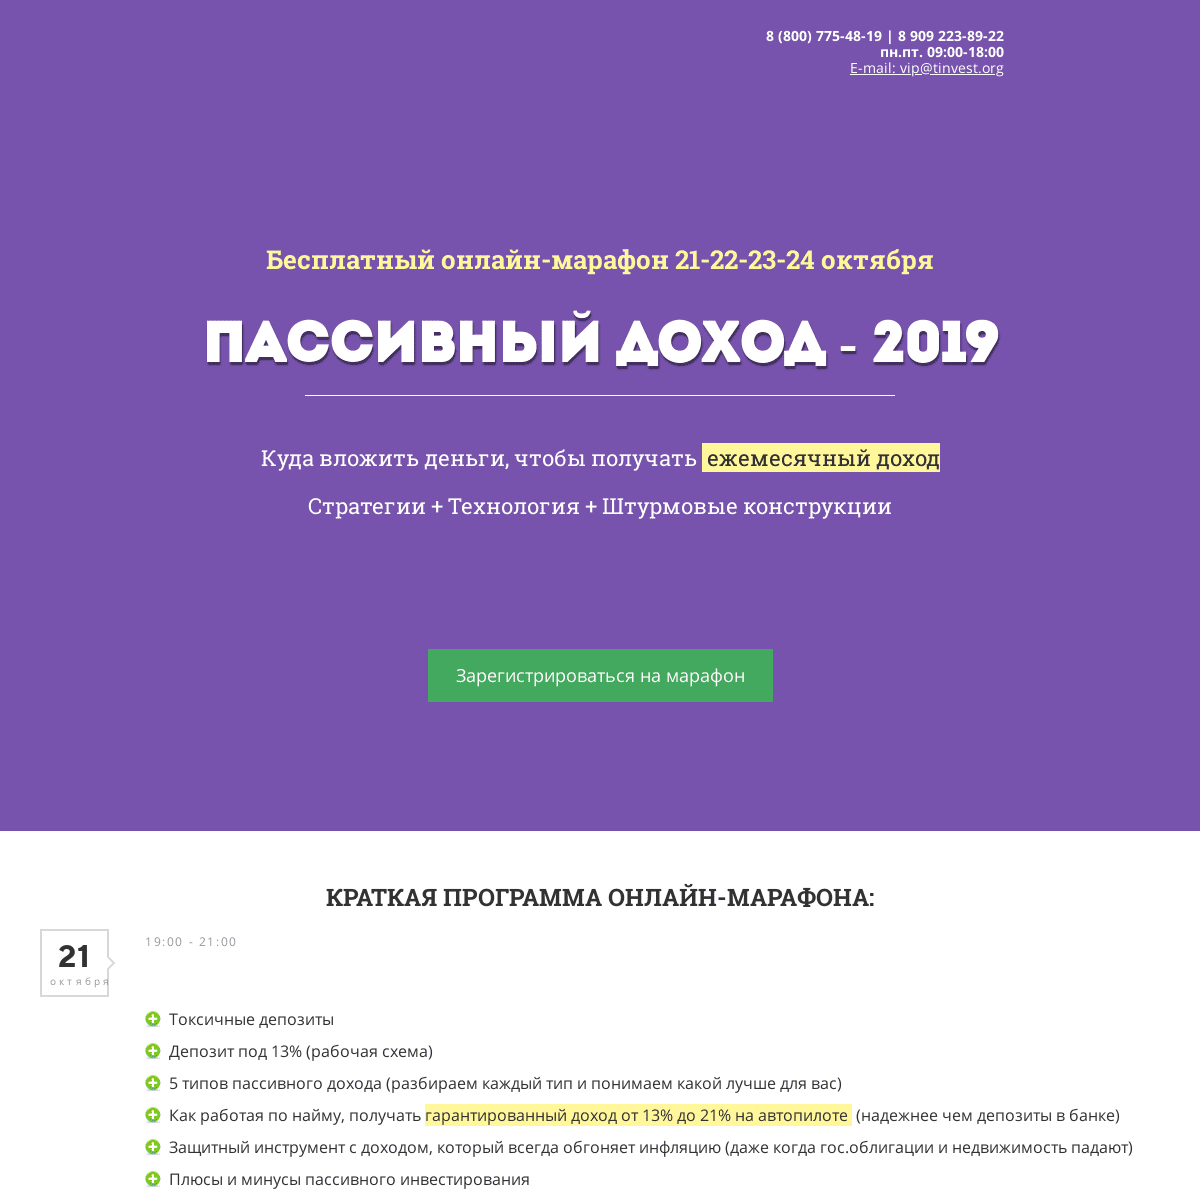 A complete backup of richsecrets.ru